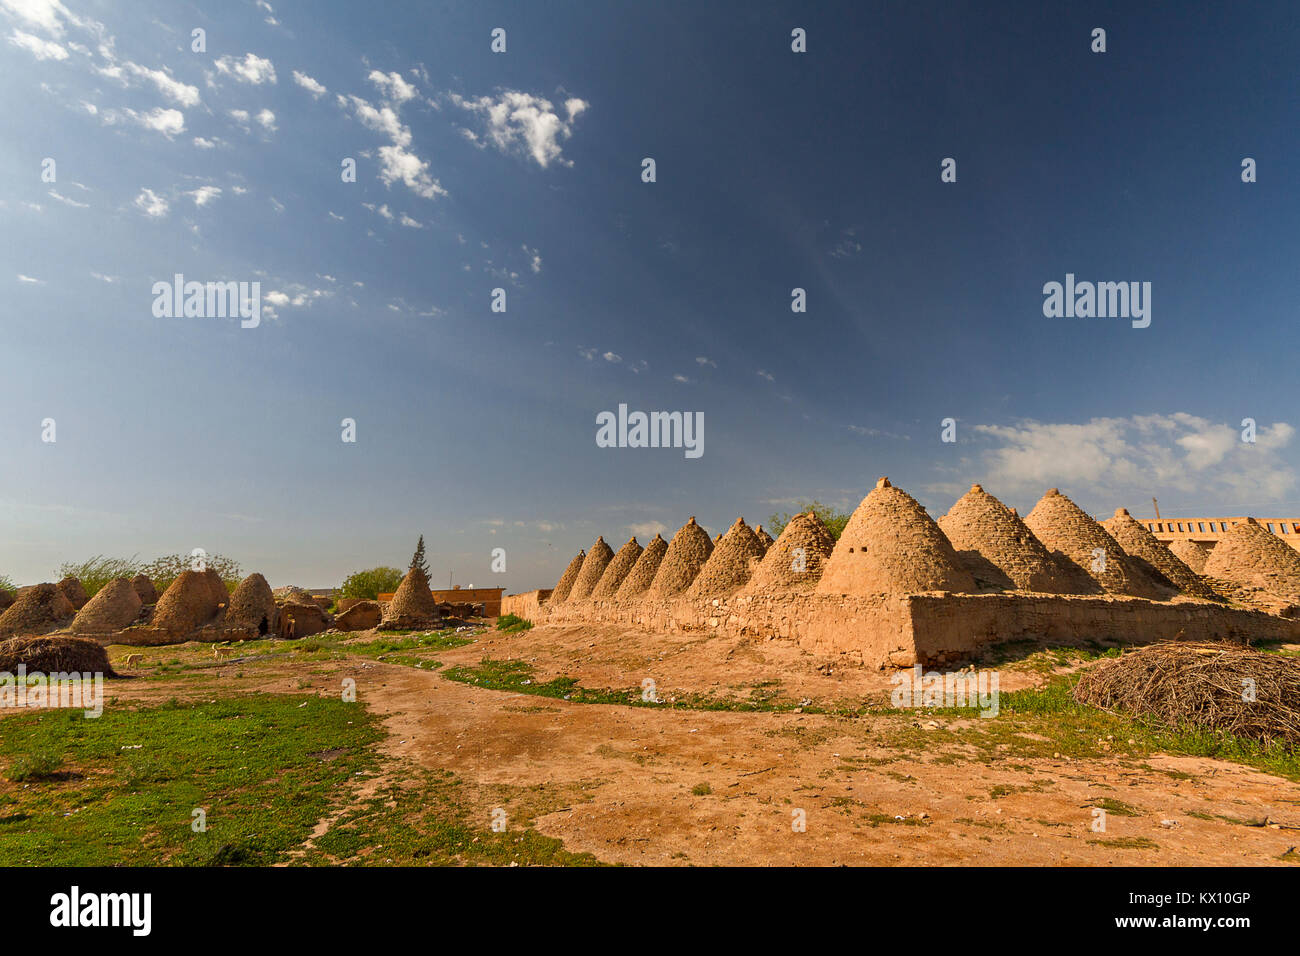 Domed adobe houses in the town of Harran, near Sanliurfa, Turkey. Stock Photo